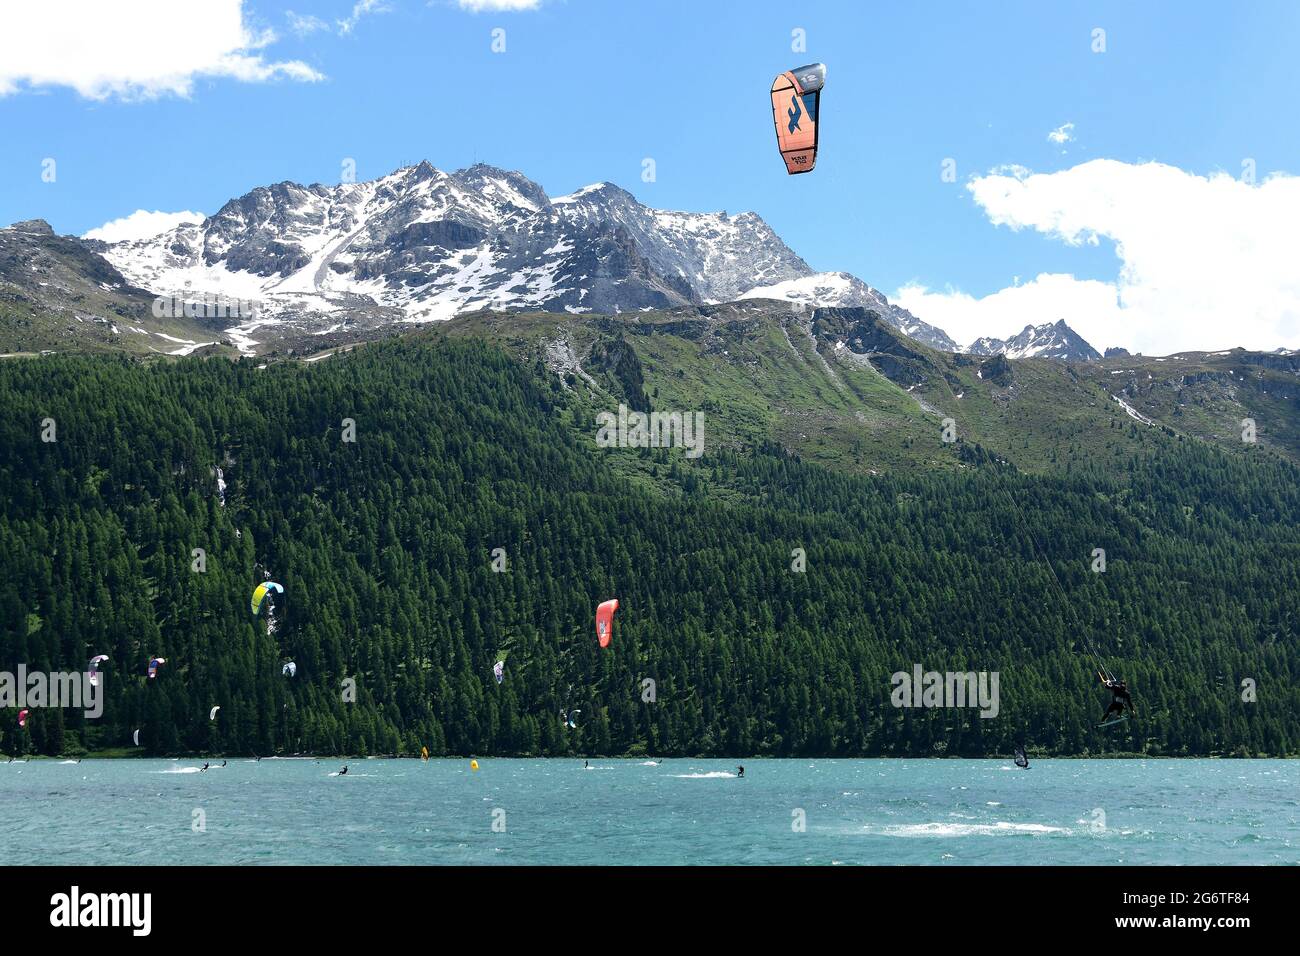 Kitesurfers on Lake Silvaplana in the Upper Engadine, Switzerland. Stock Photo